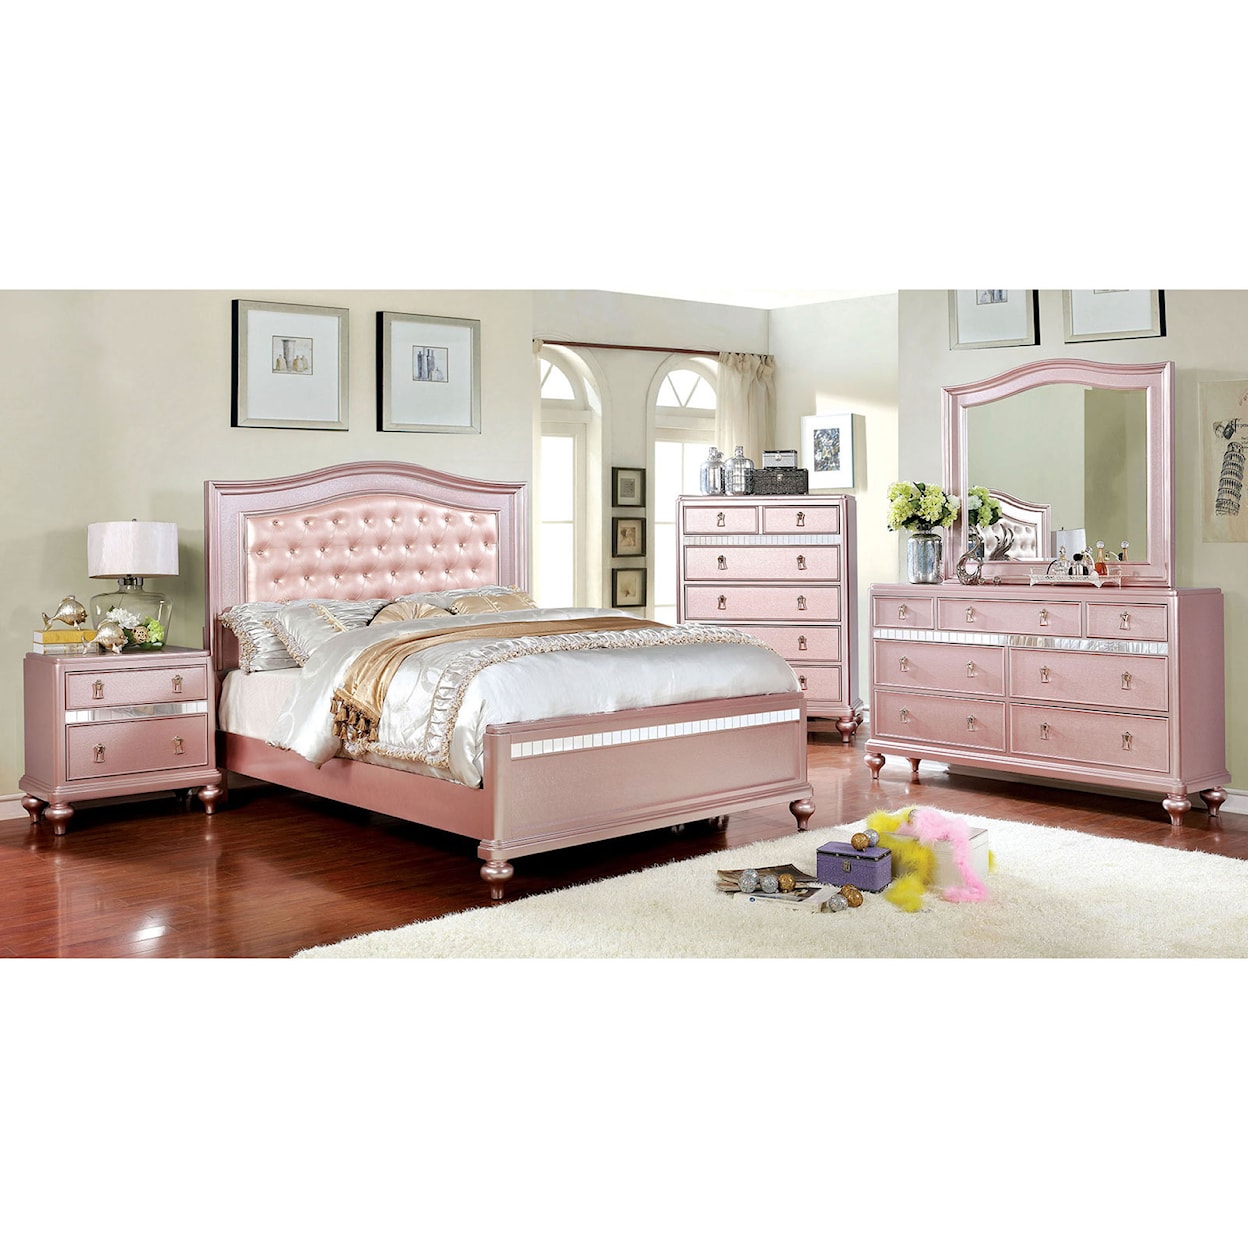 Furniture of America Ariston Twin Bedroom Set